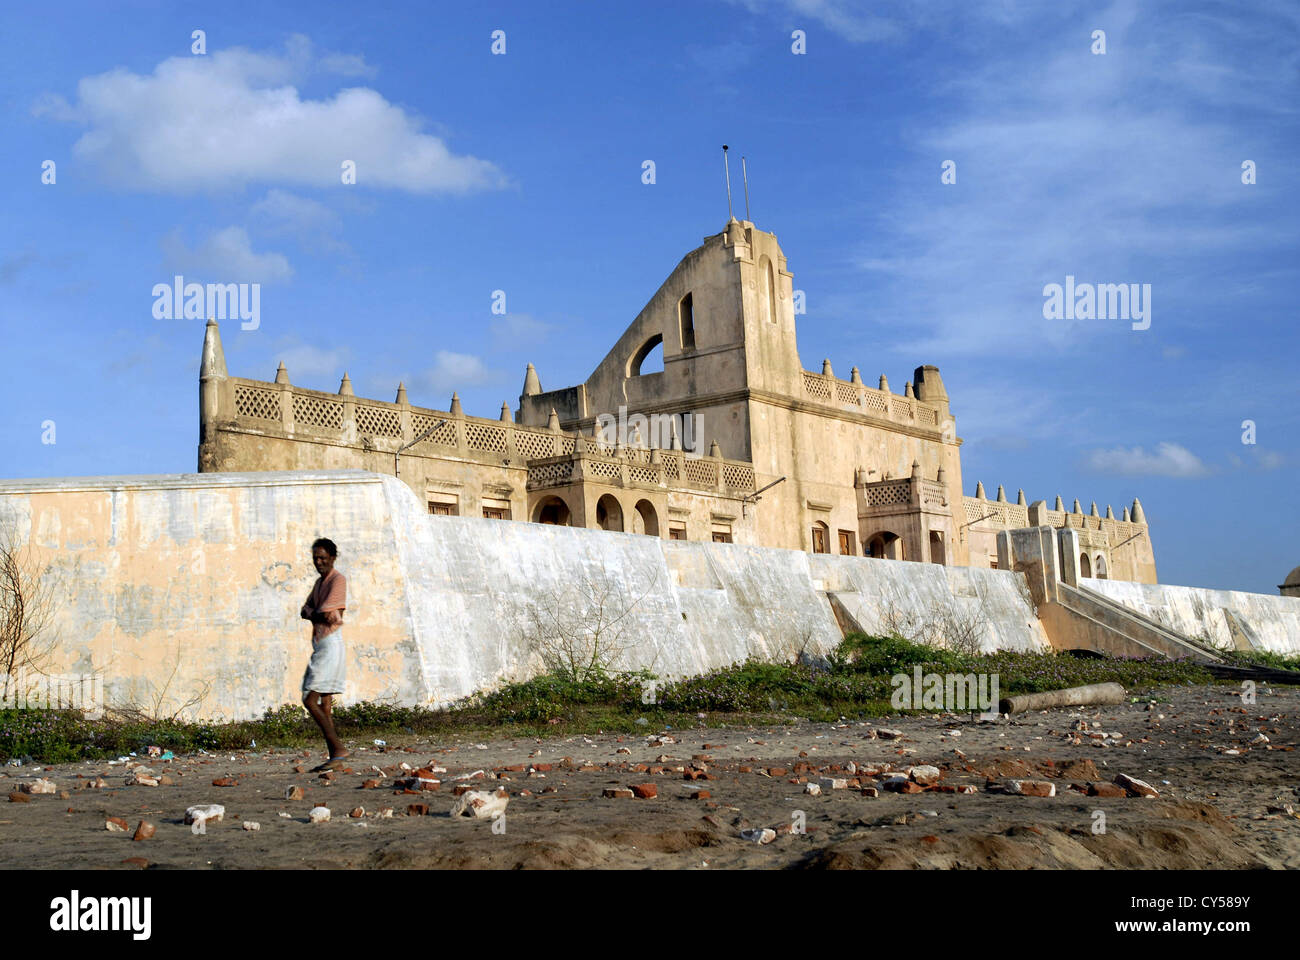 Dänische Fort; Fort Dansborg im Tharangambadi; Tranquebar, Tamil Nadu, Indien Stockfoto